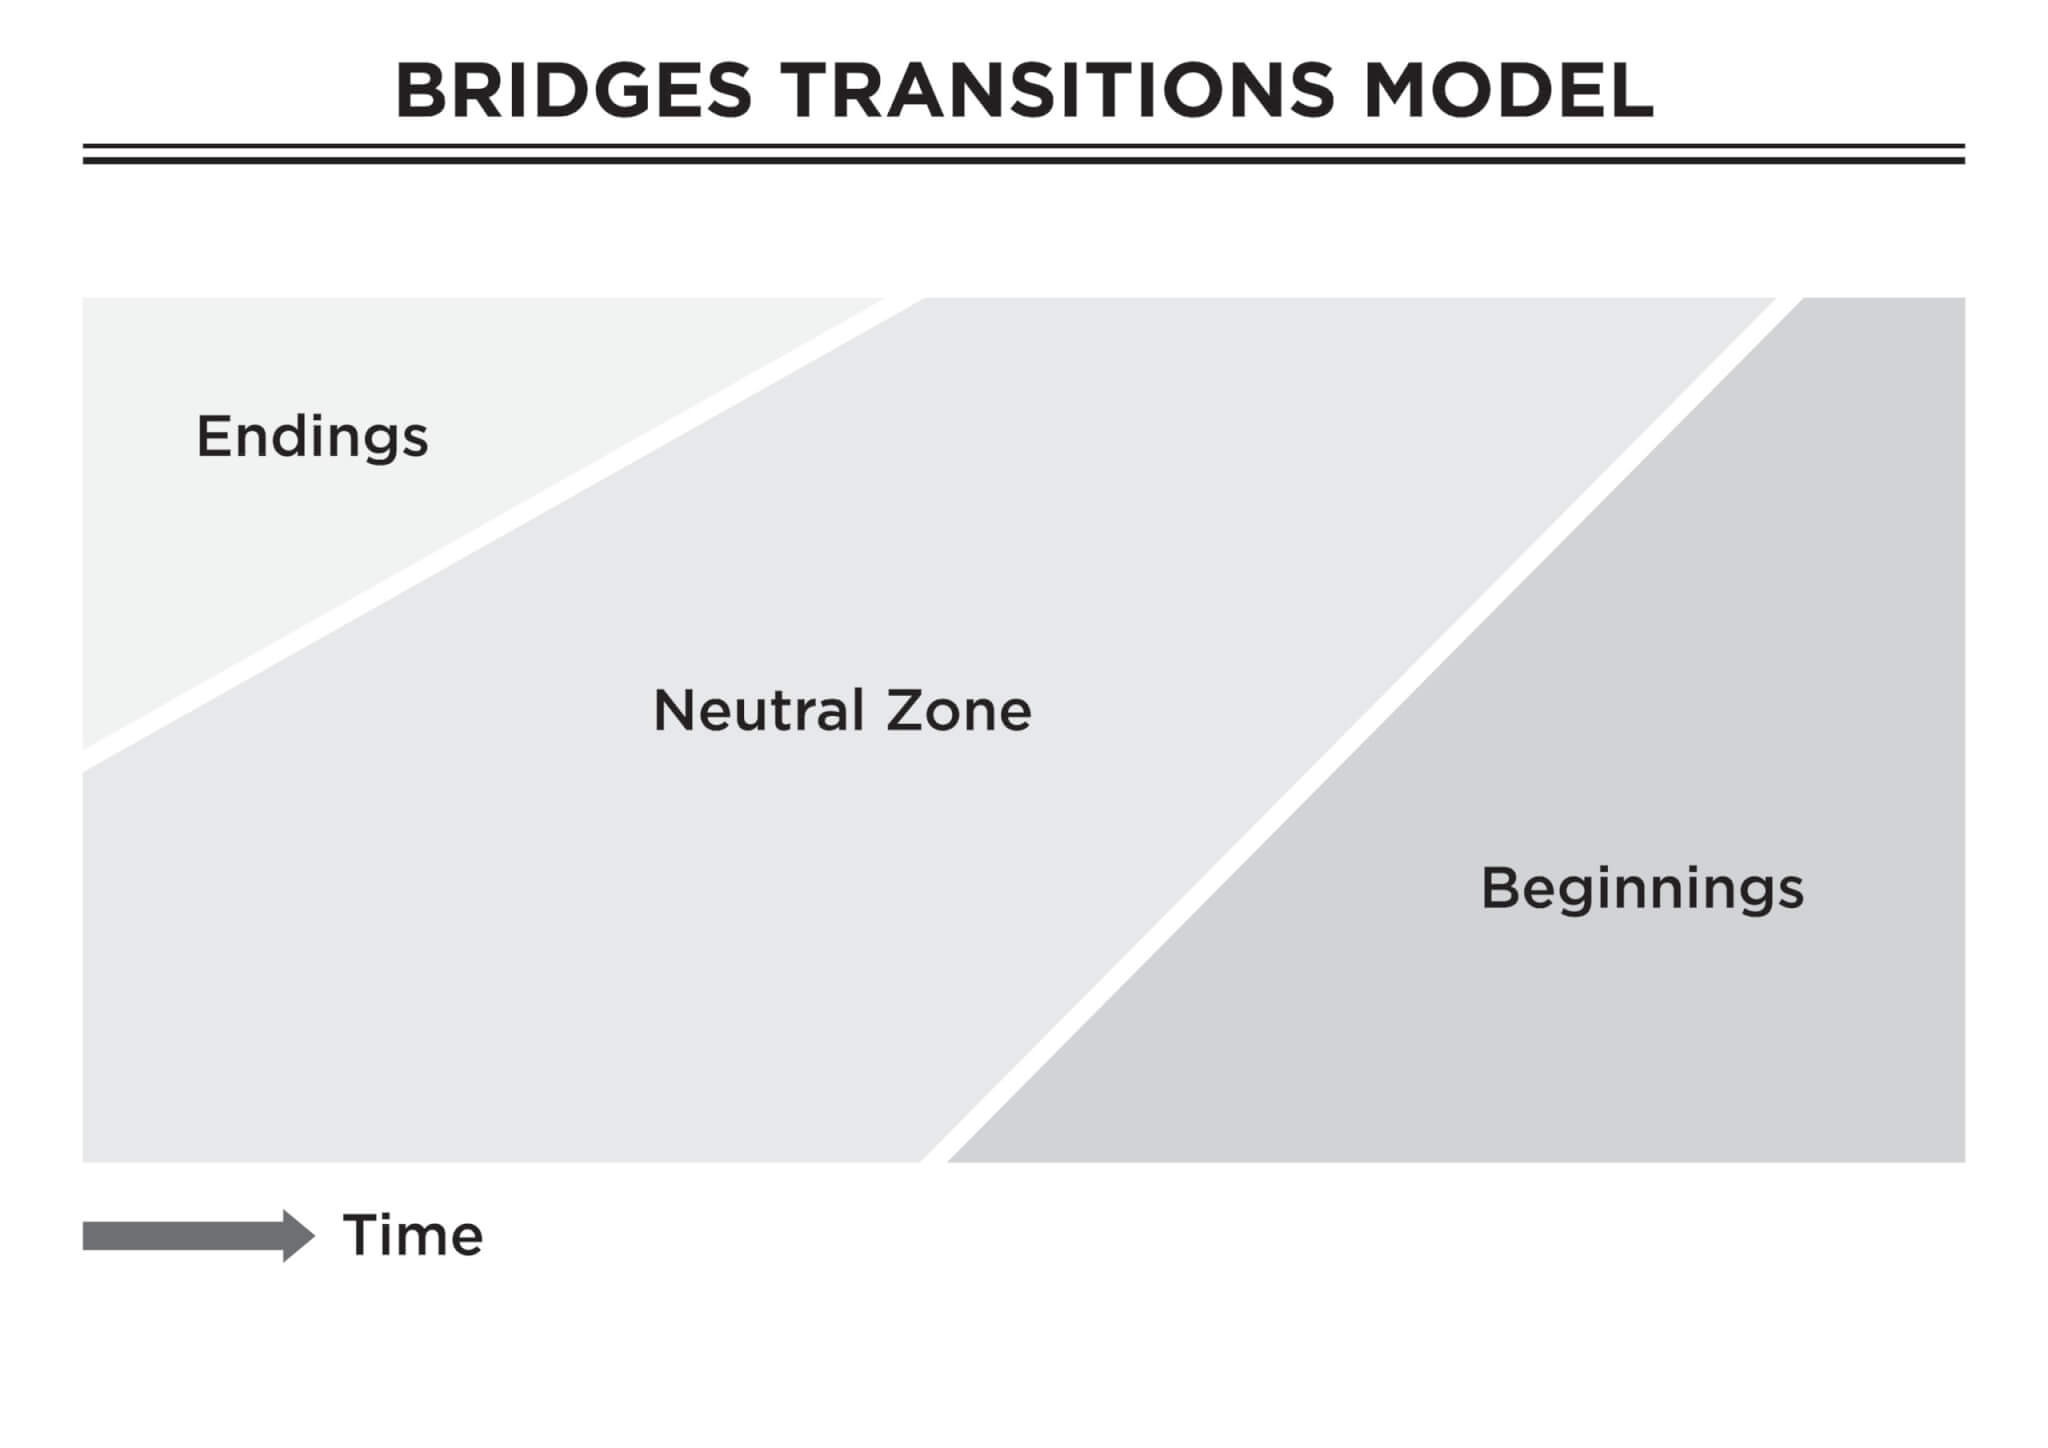 Bridges model